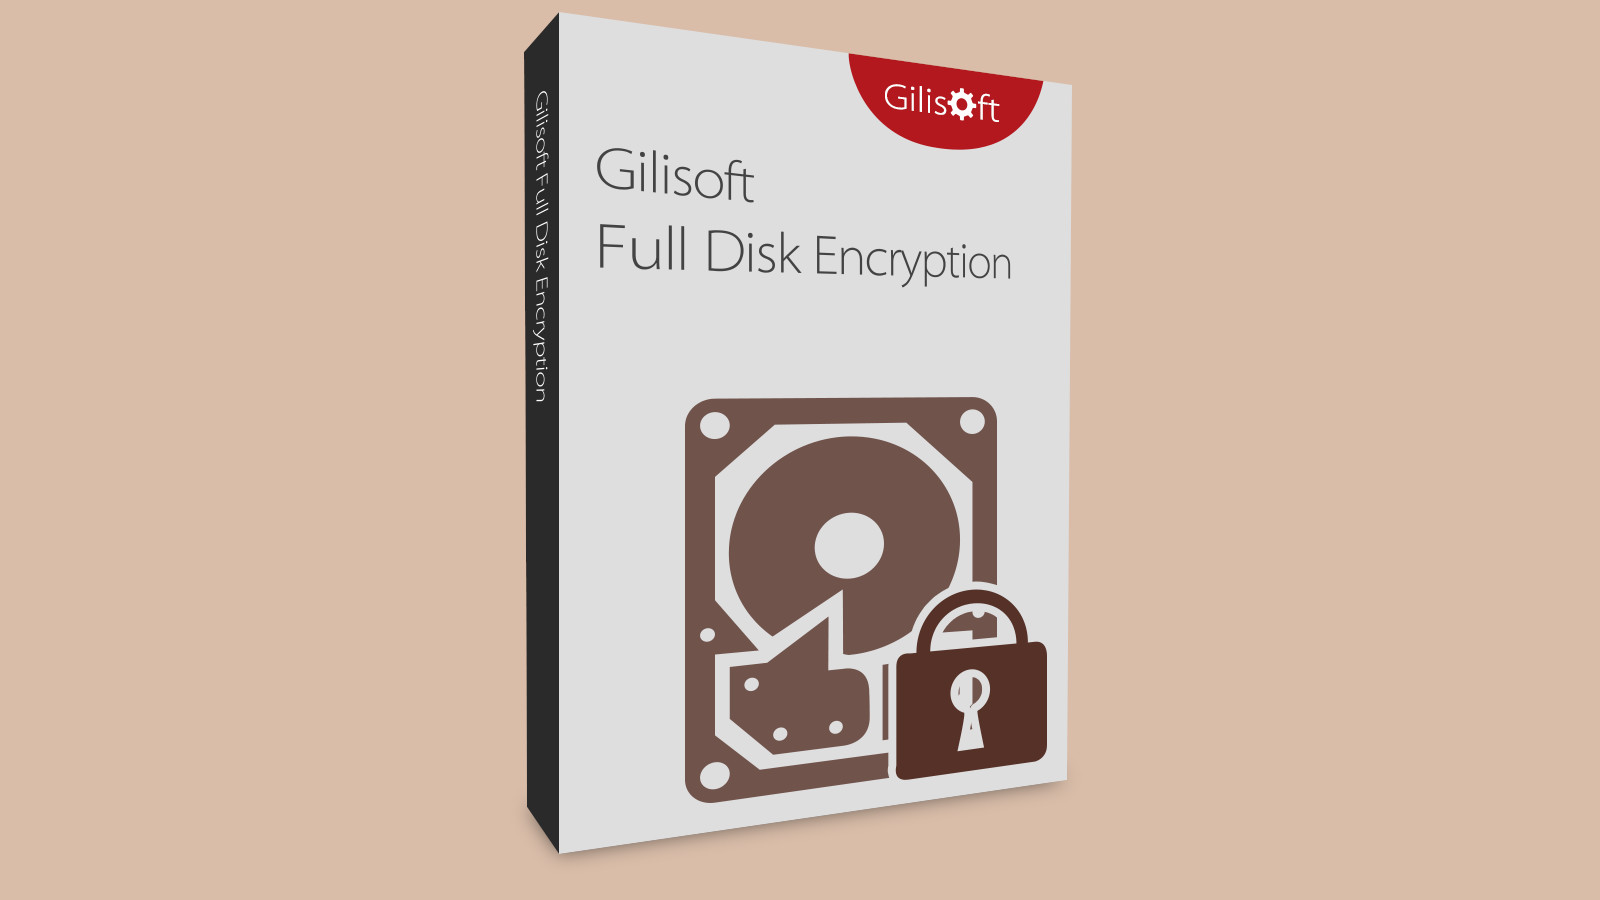 Gilisoft Full Disk Encryption CD Key [$ 19.72]